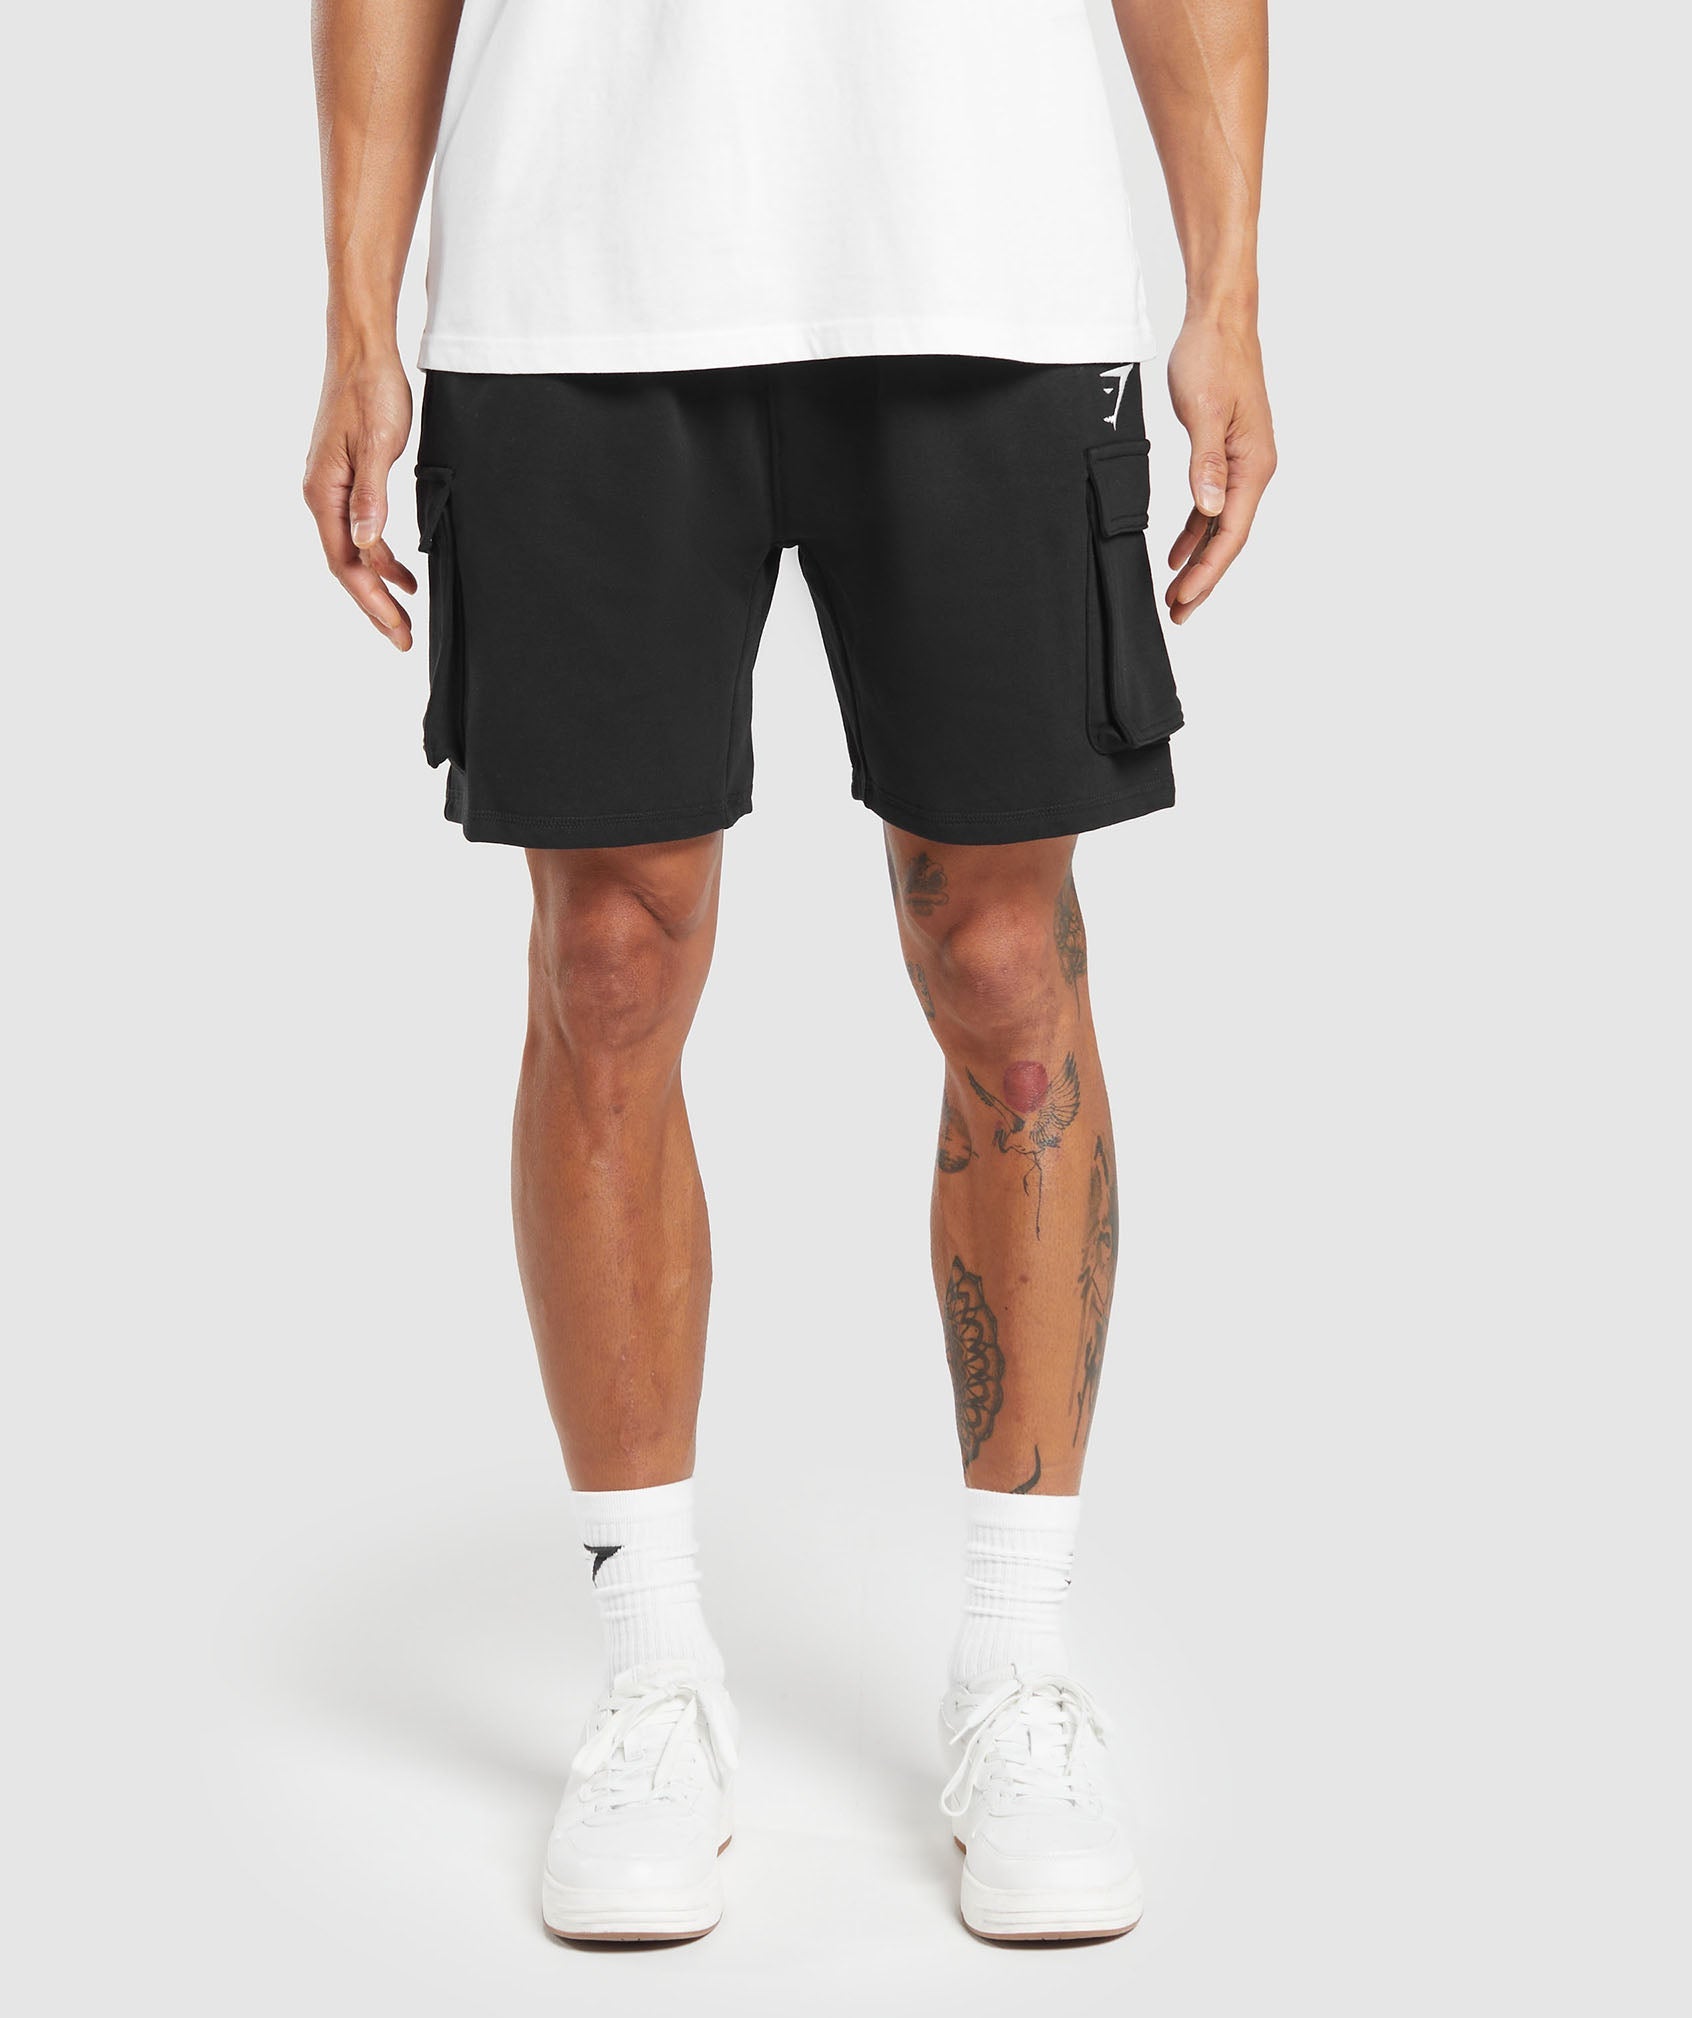 Gymshark Crest Cargo Shorts - Black